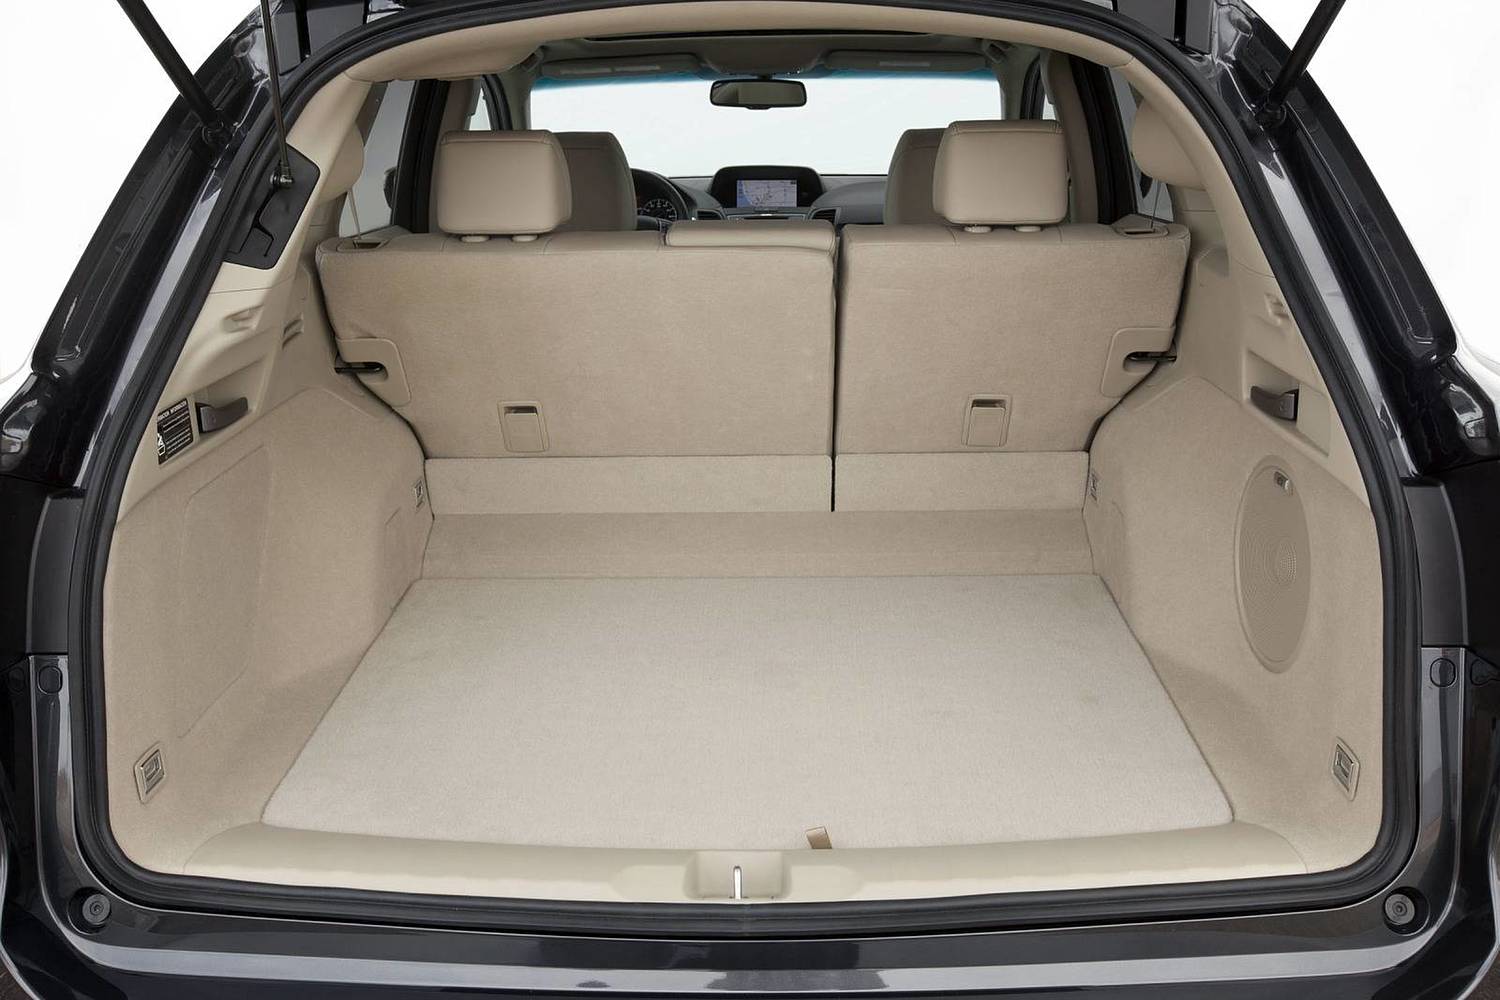 Acura RDX 4dr SUV Cargo Area (2014 model year shown)